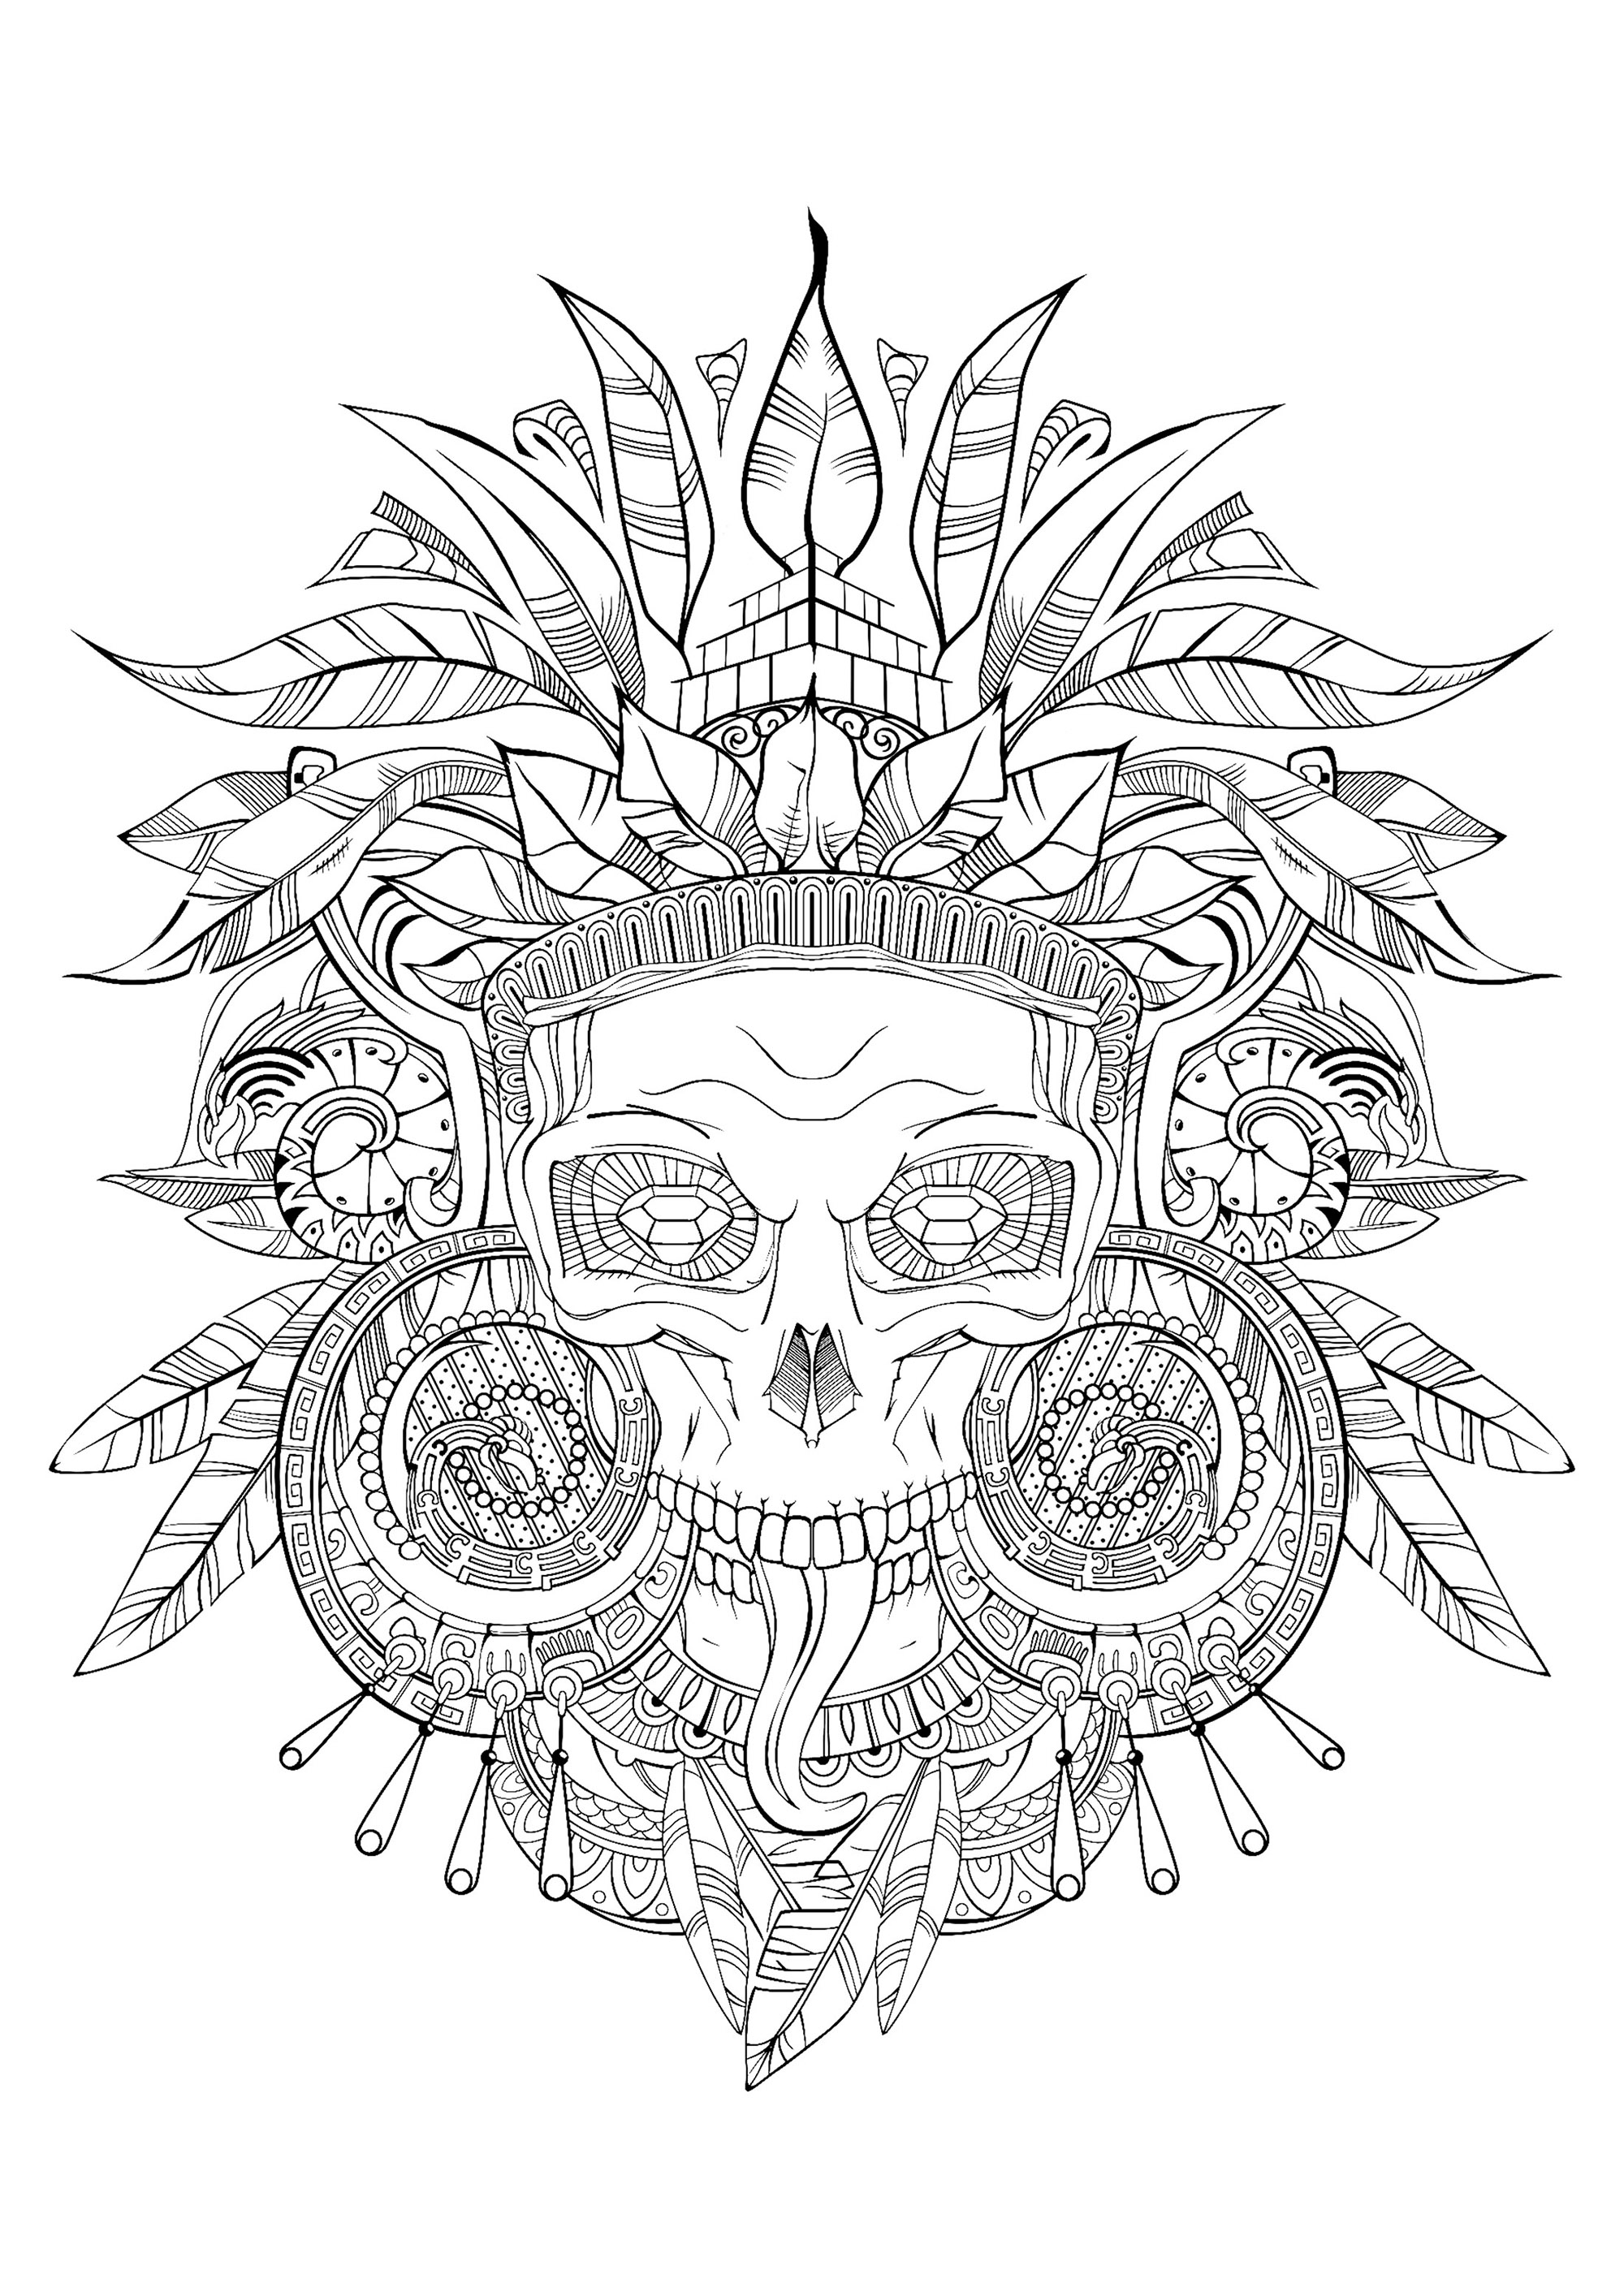 Crâne aztèque - noir & blanc, Source : 123rf   Artiste : redspruce